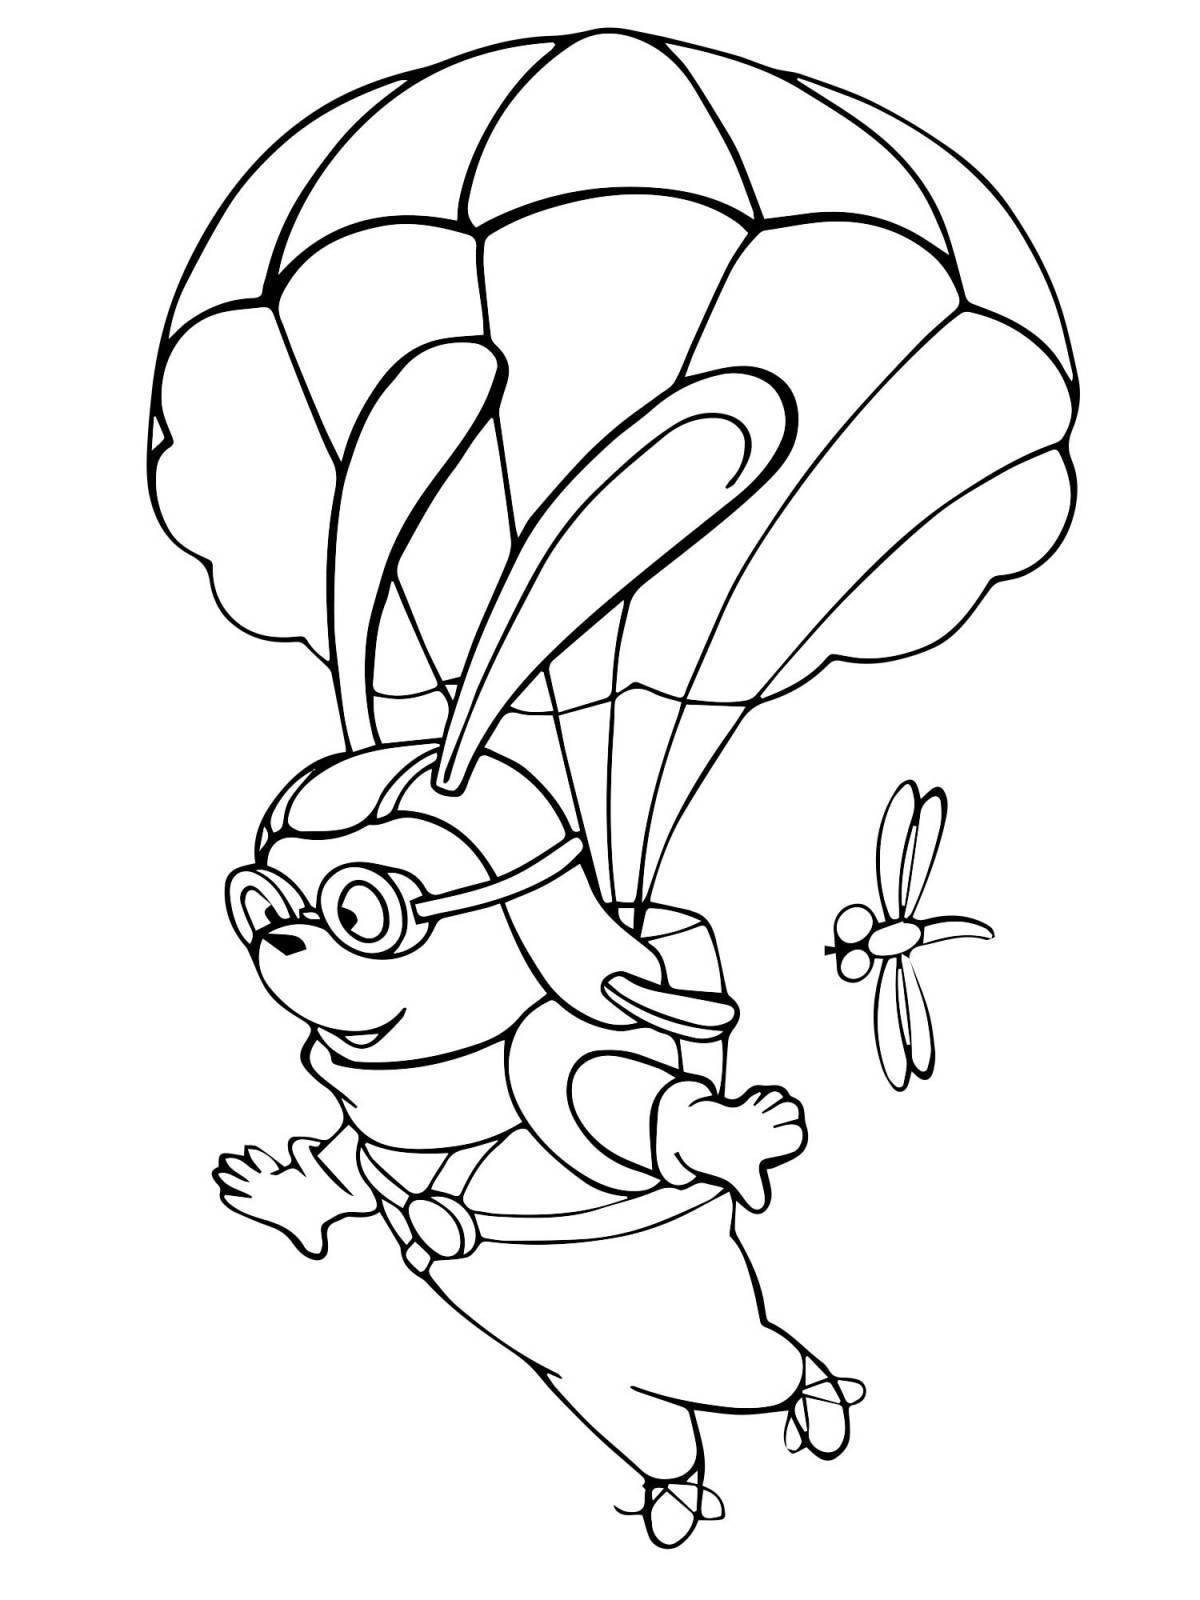 Coloring page daring skydiver